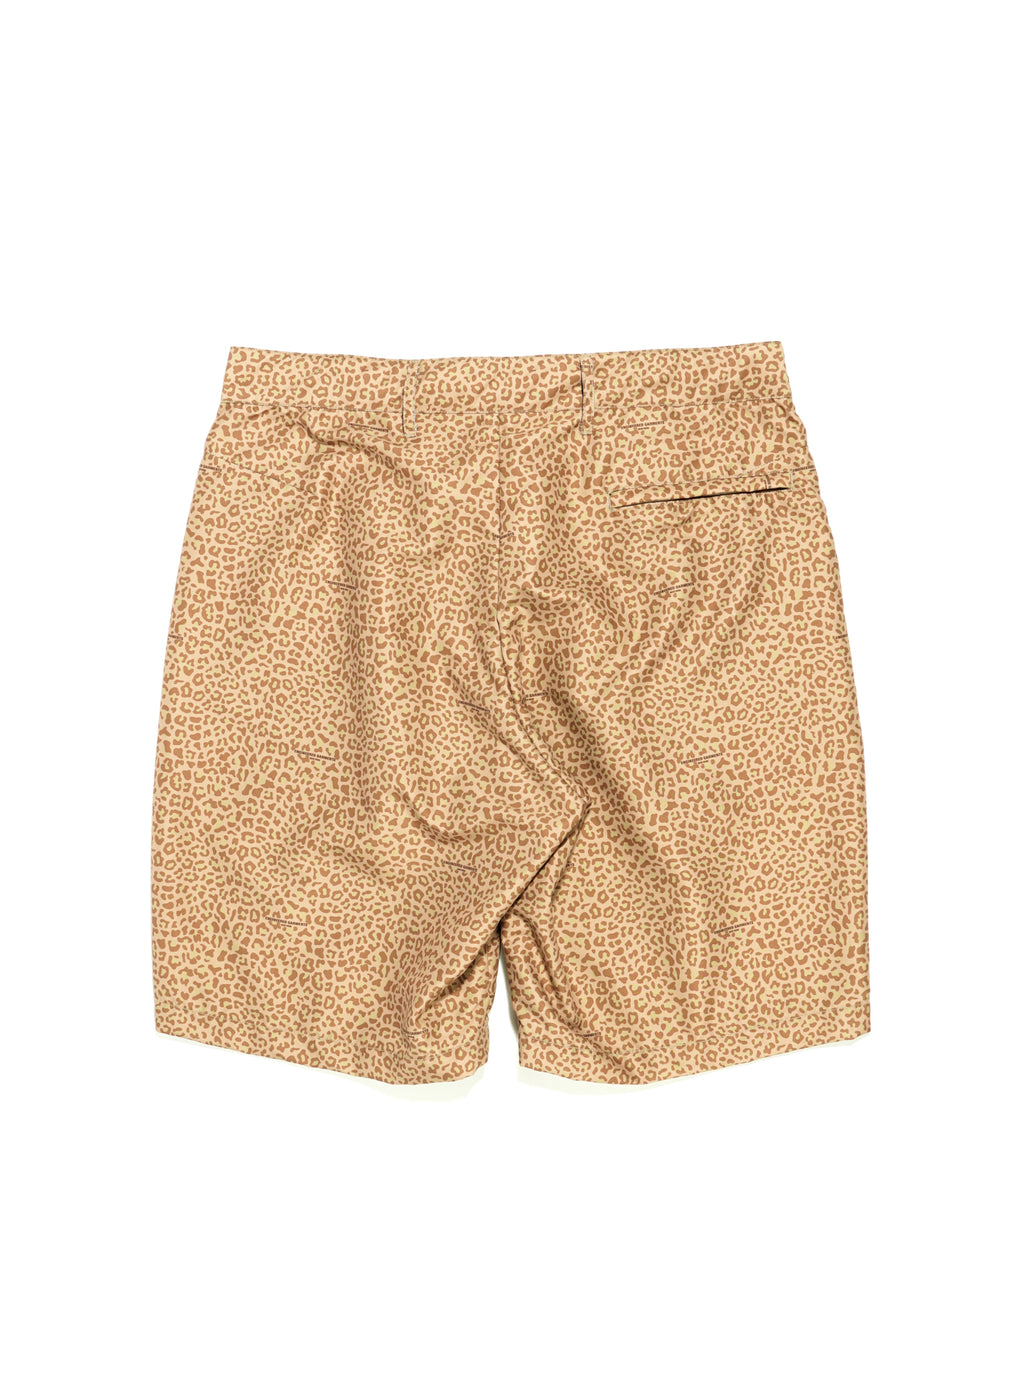 Engineered Garments sunset shorts